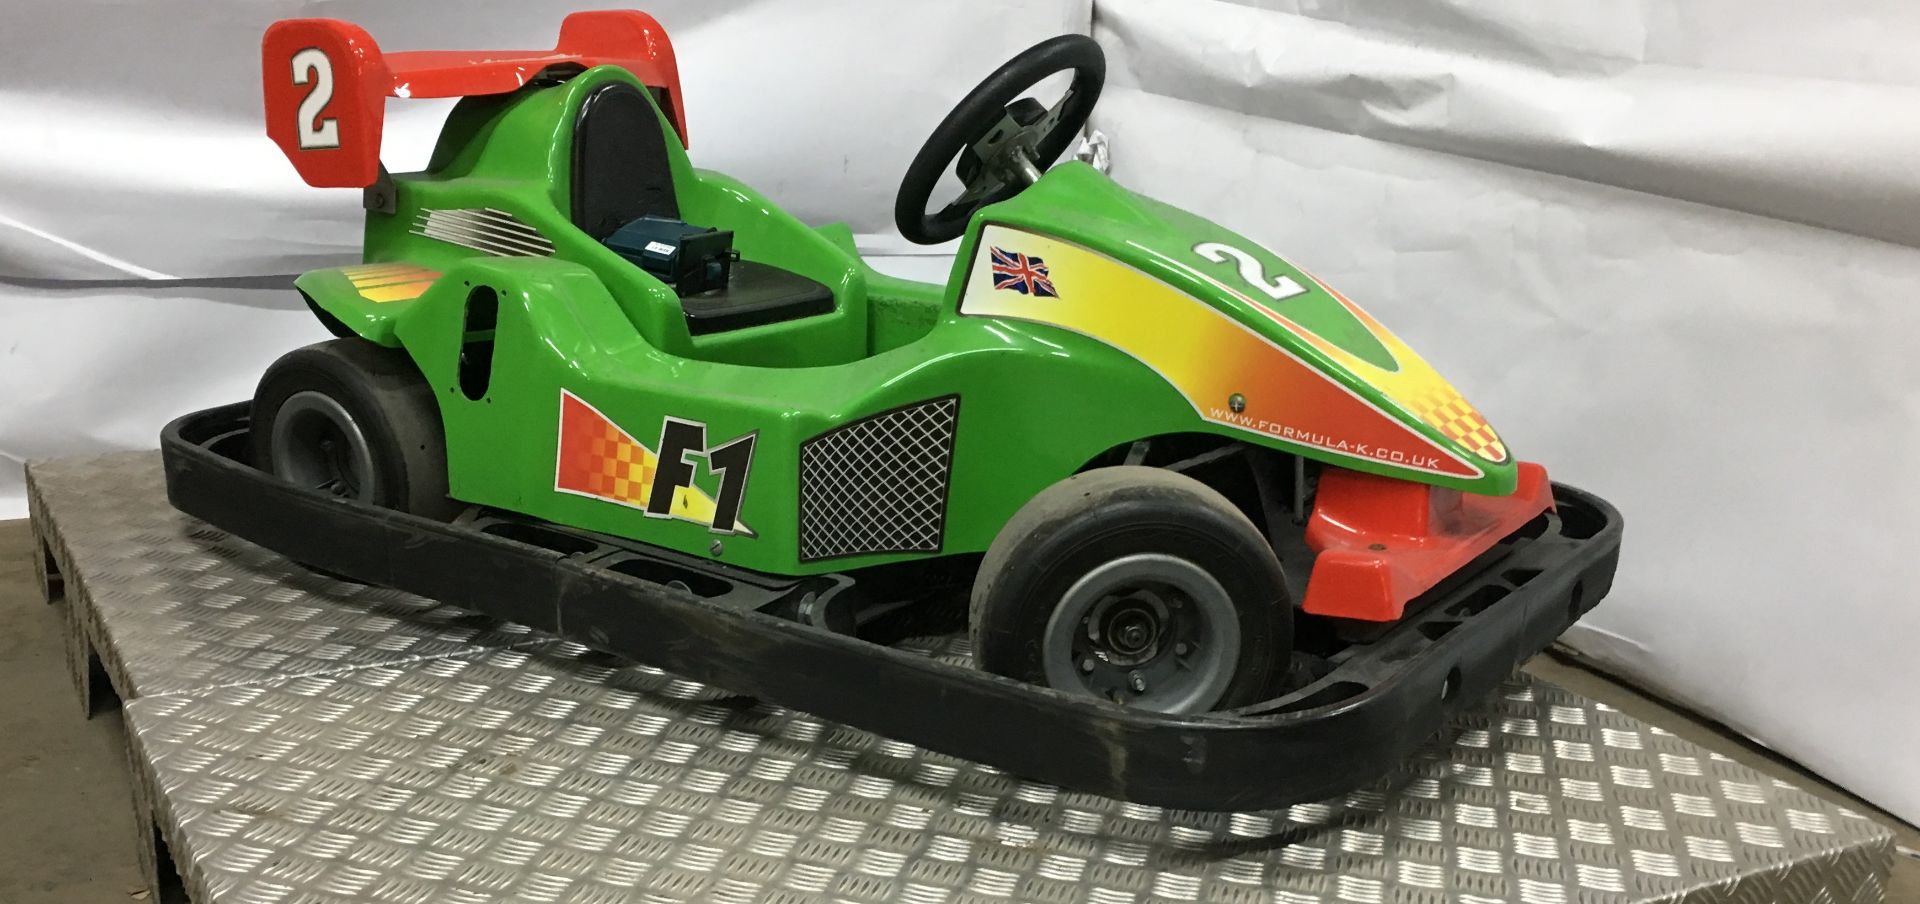 Formula K 'F1' Kids Pay & Ride Go Kart w/ Battery Charger - Image 2 of 4